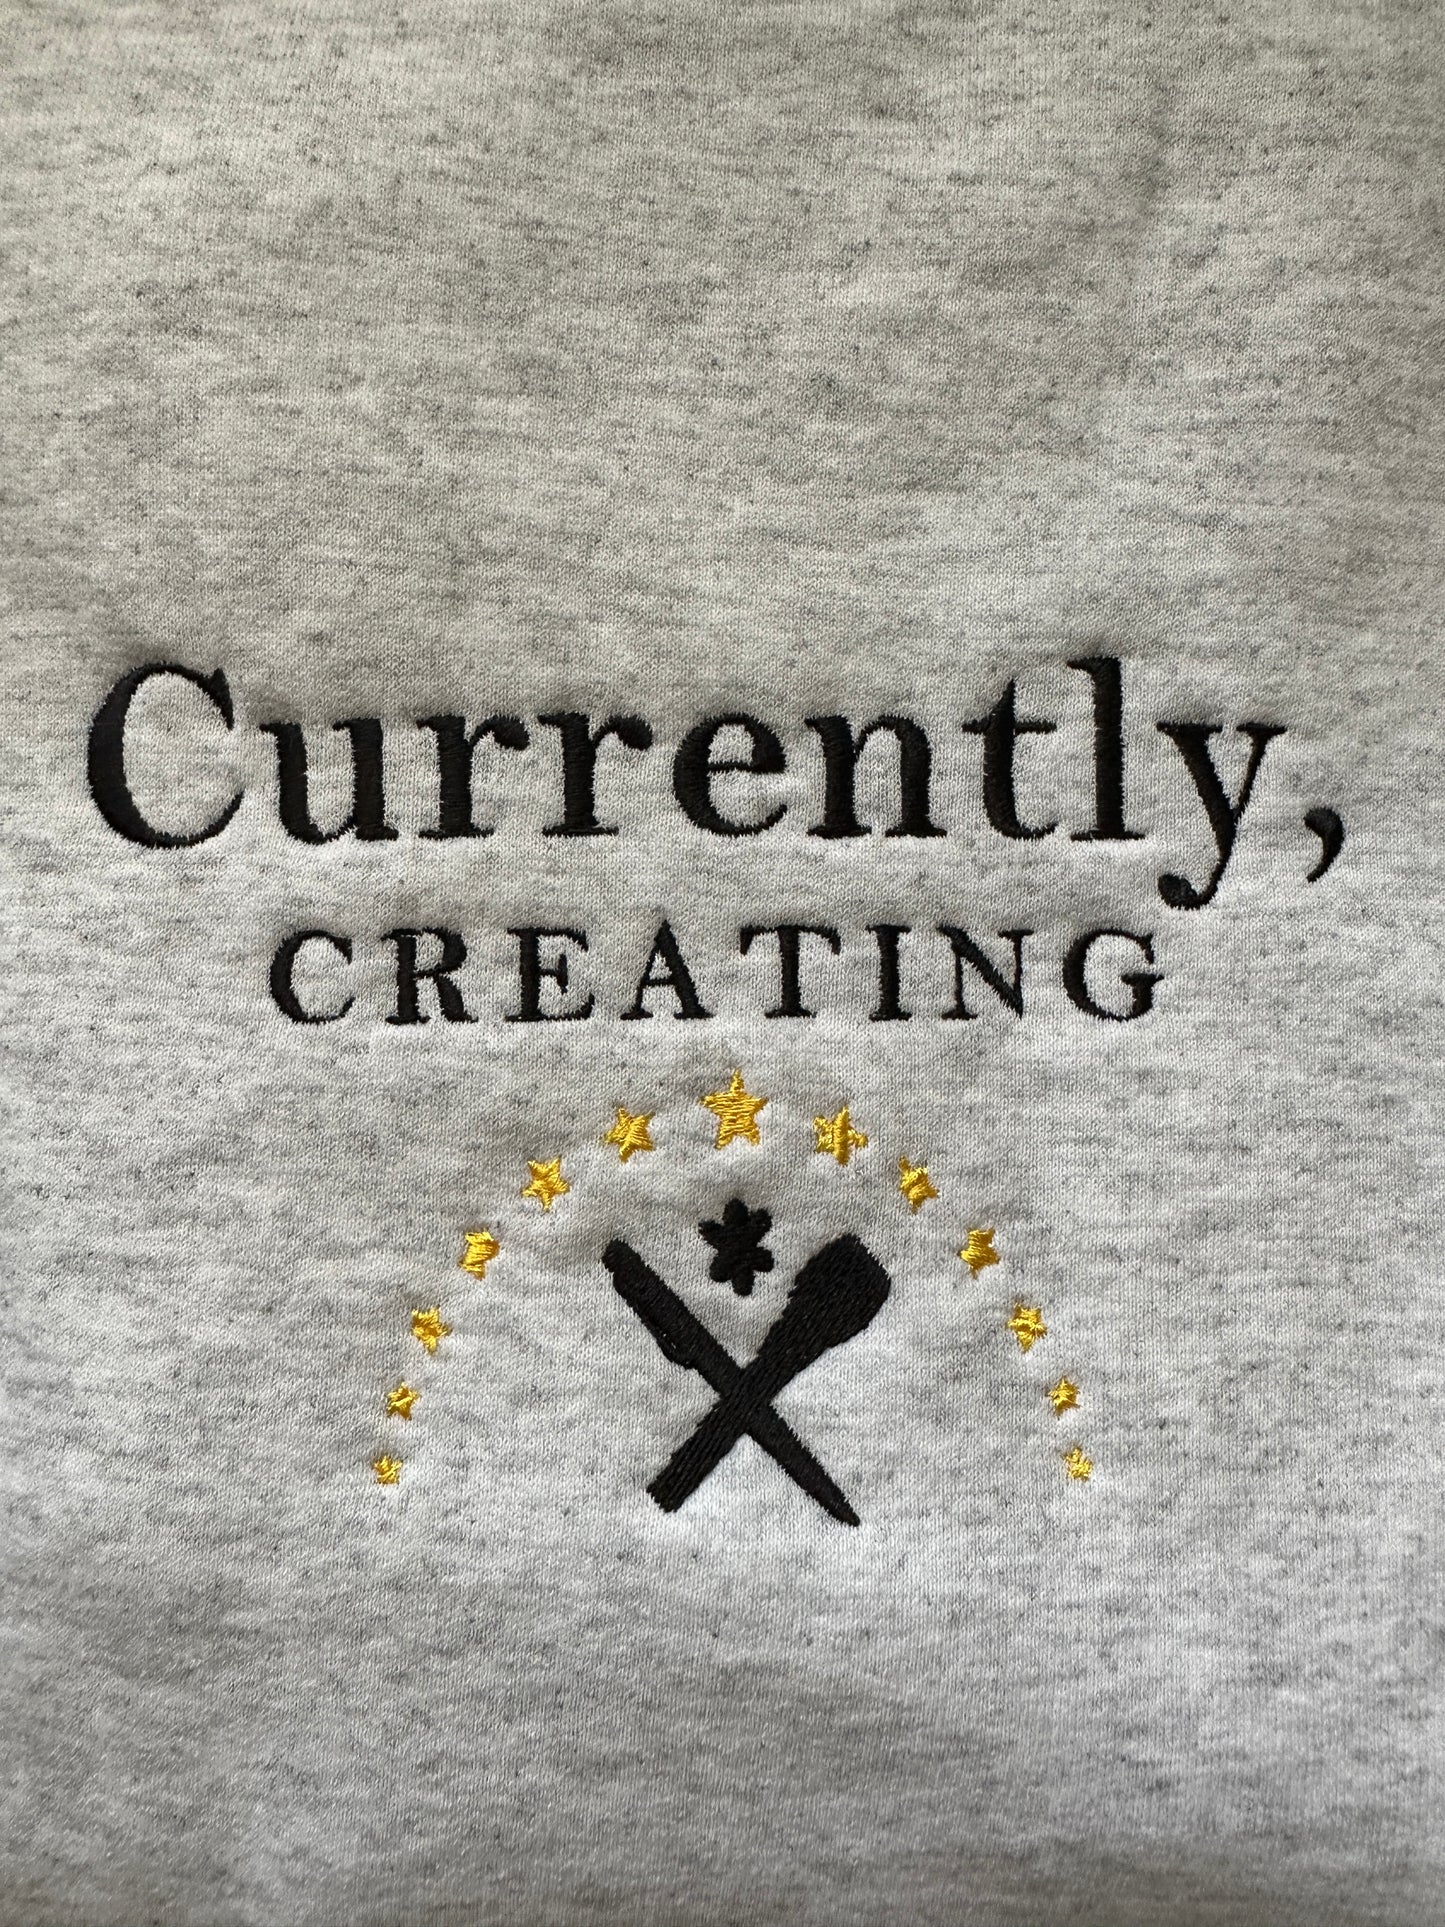 Currently, Creating Embroidered Sweatshirt